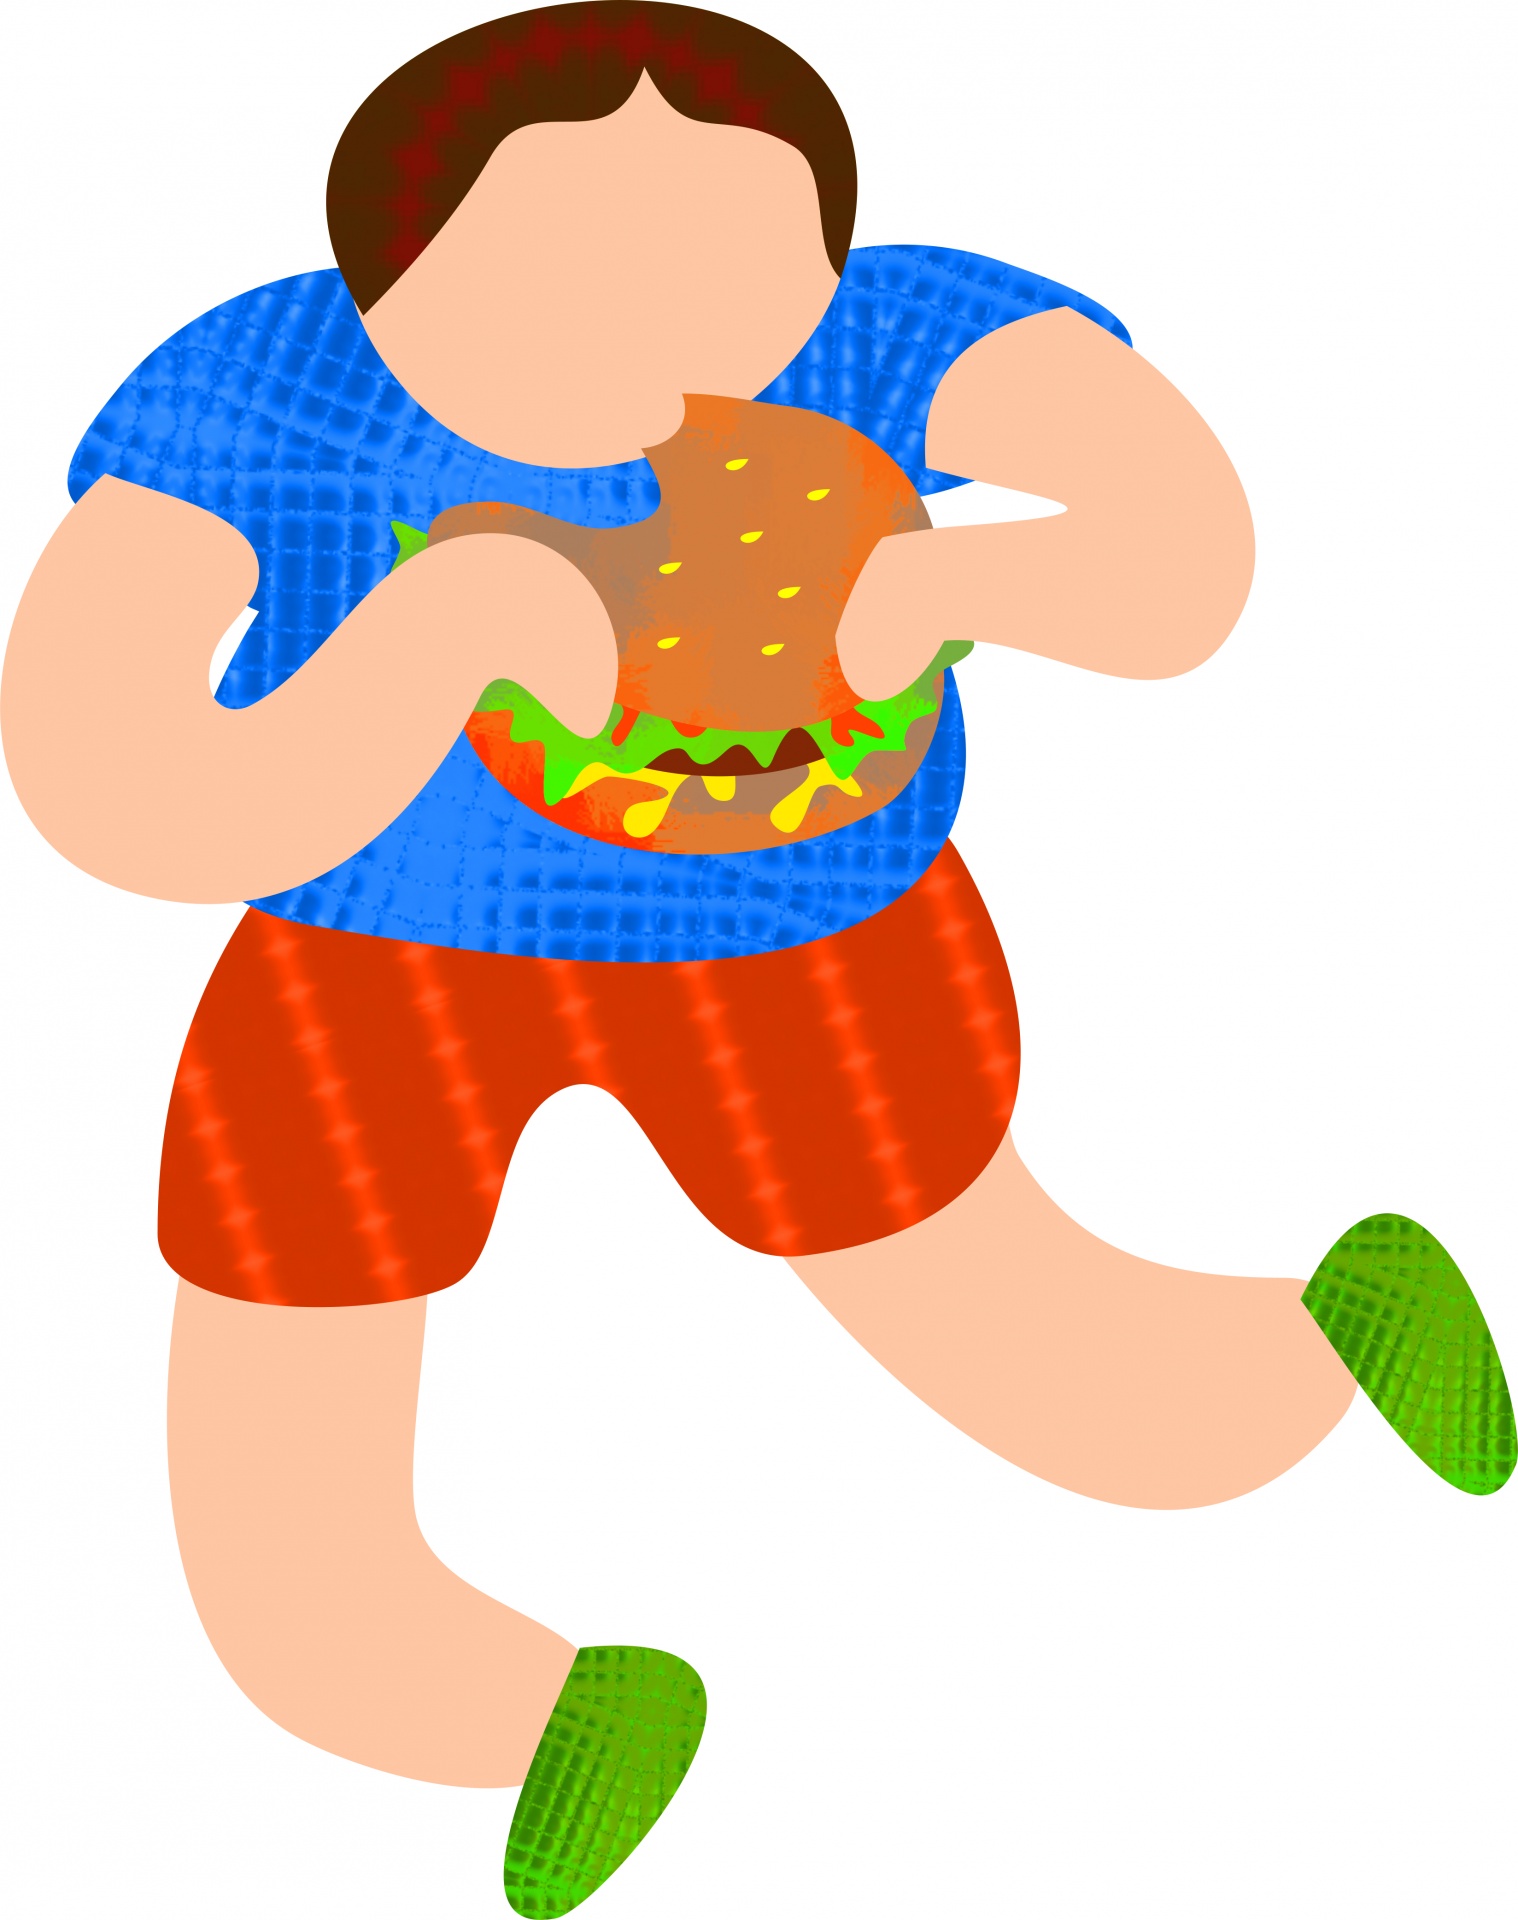 Boy eating a burger.